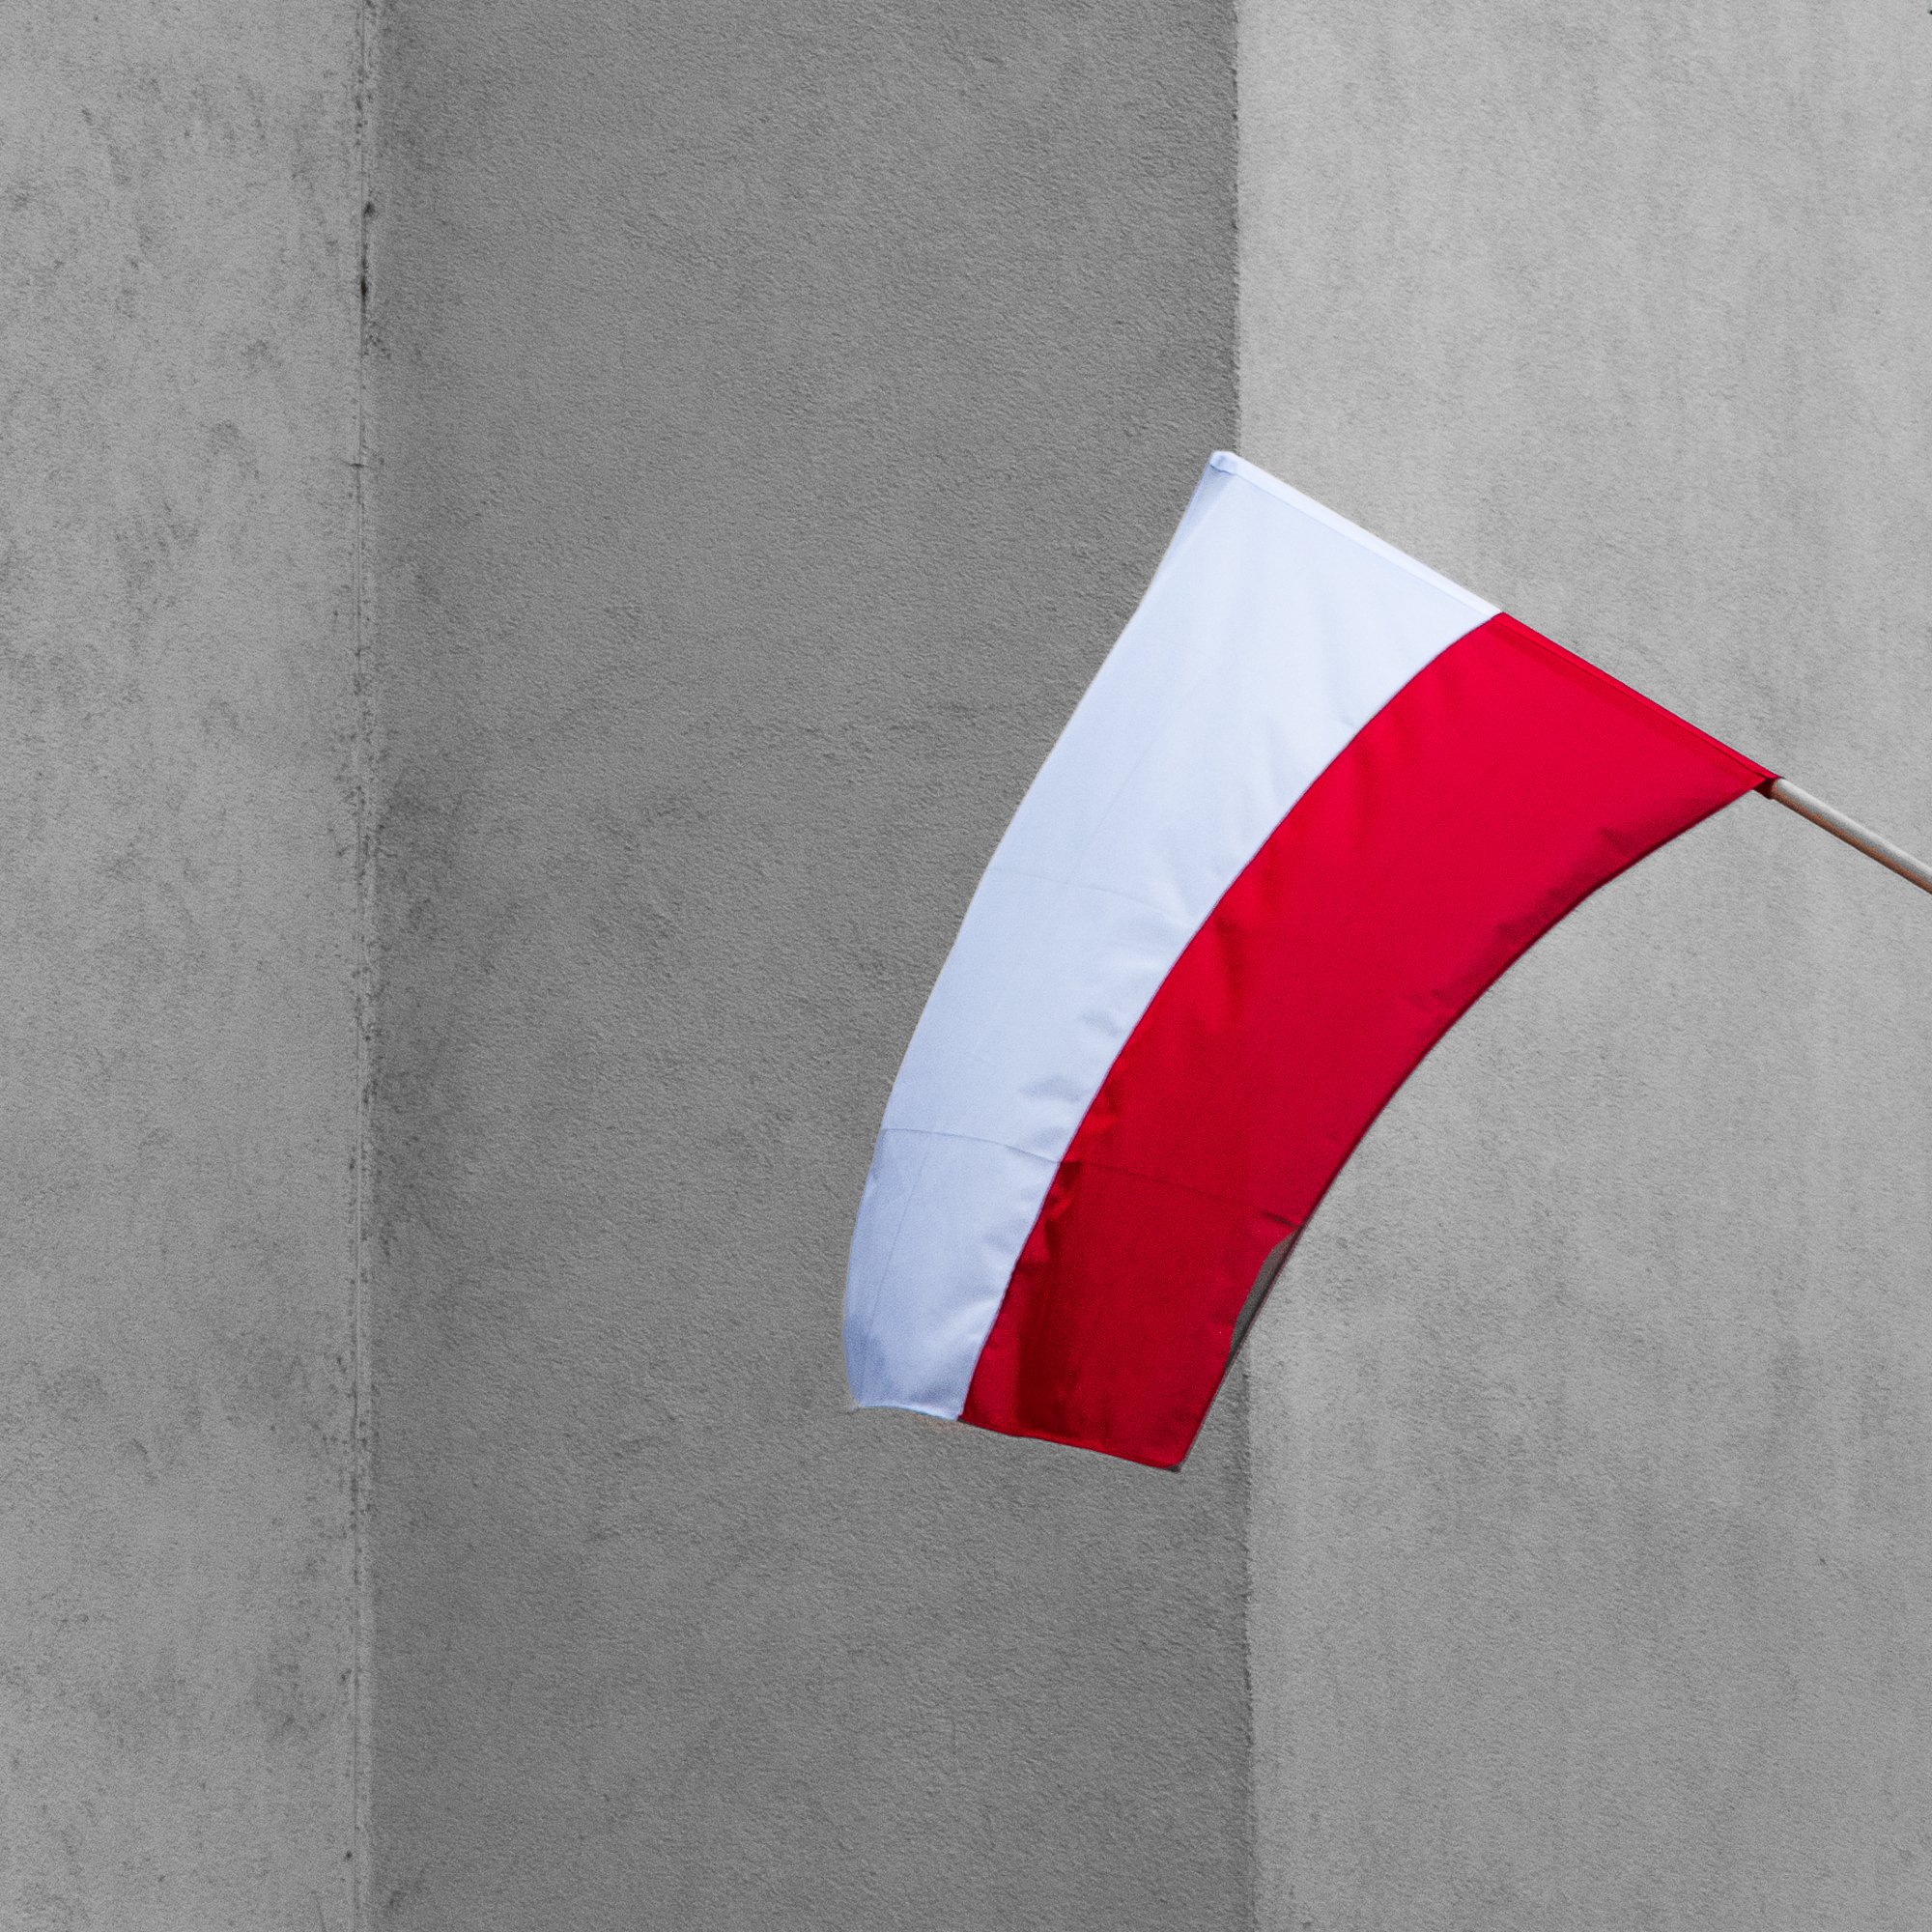 Adam Mazek Photography. Warsaw (Warszawa) 2017. Post: "Perspectives for my nation." Square. Polish flag. Minimalism. Portfolio: Square, part VII.